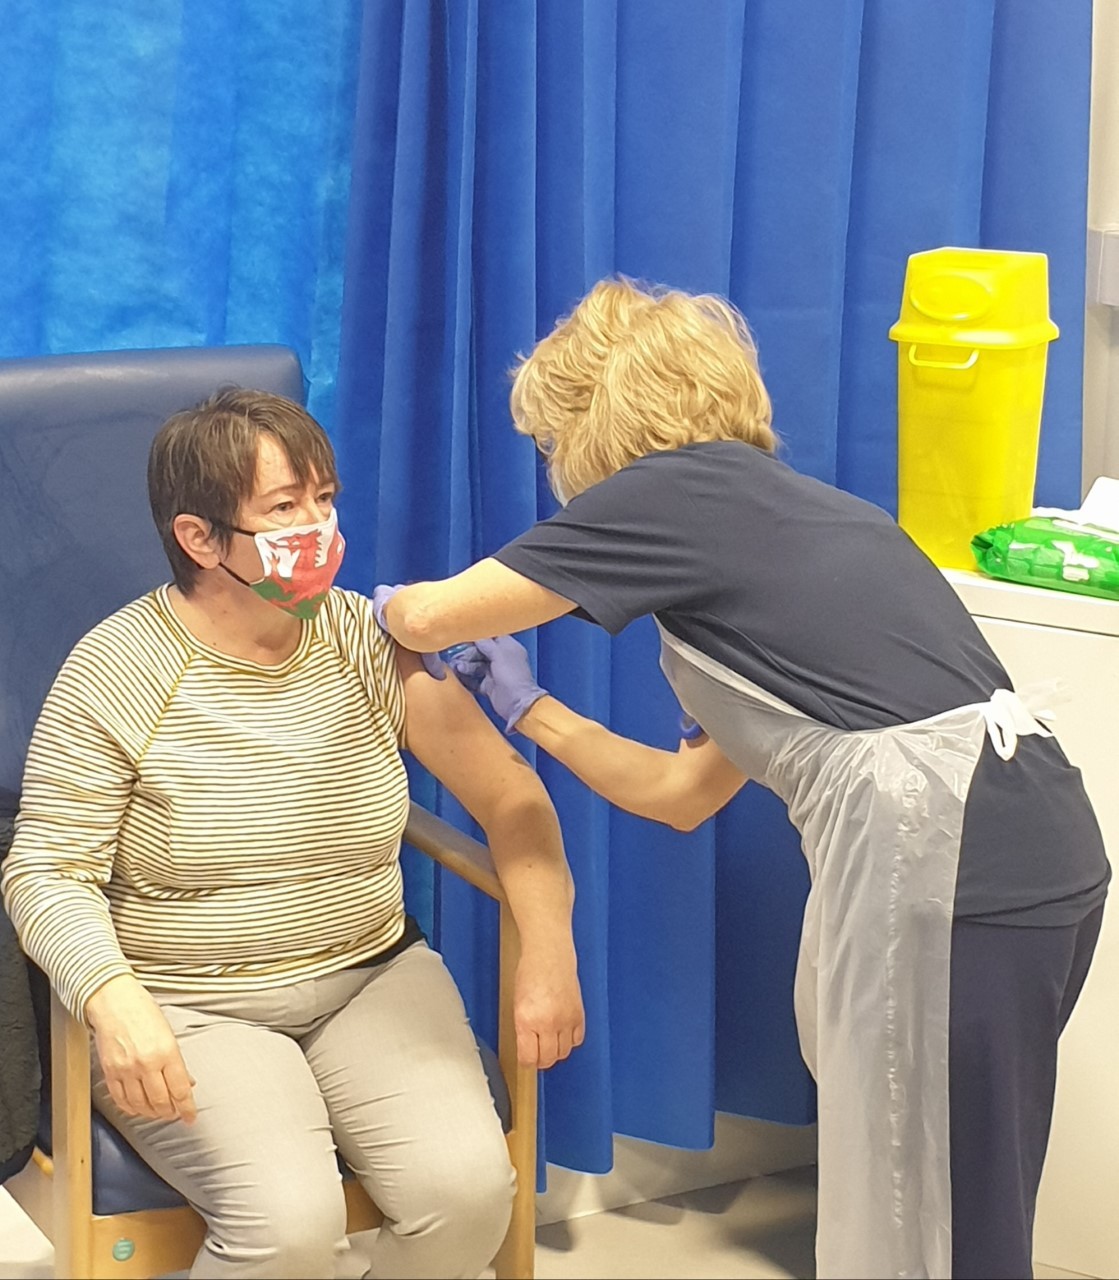 A vaccination takes place at Venue Cymru in Llandudno.